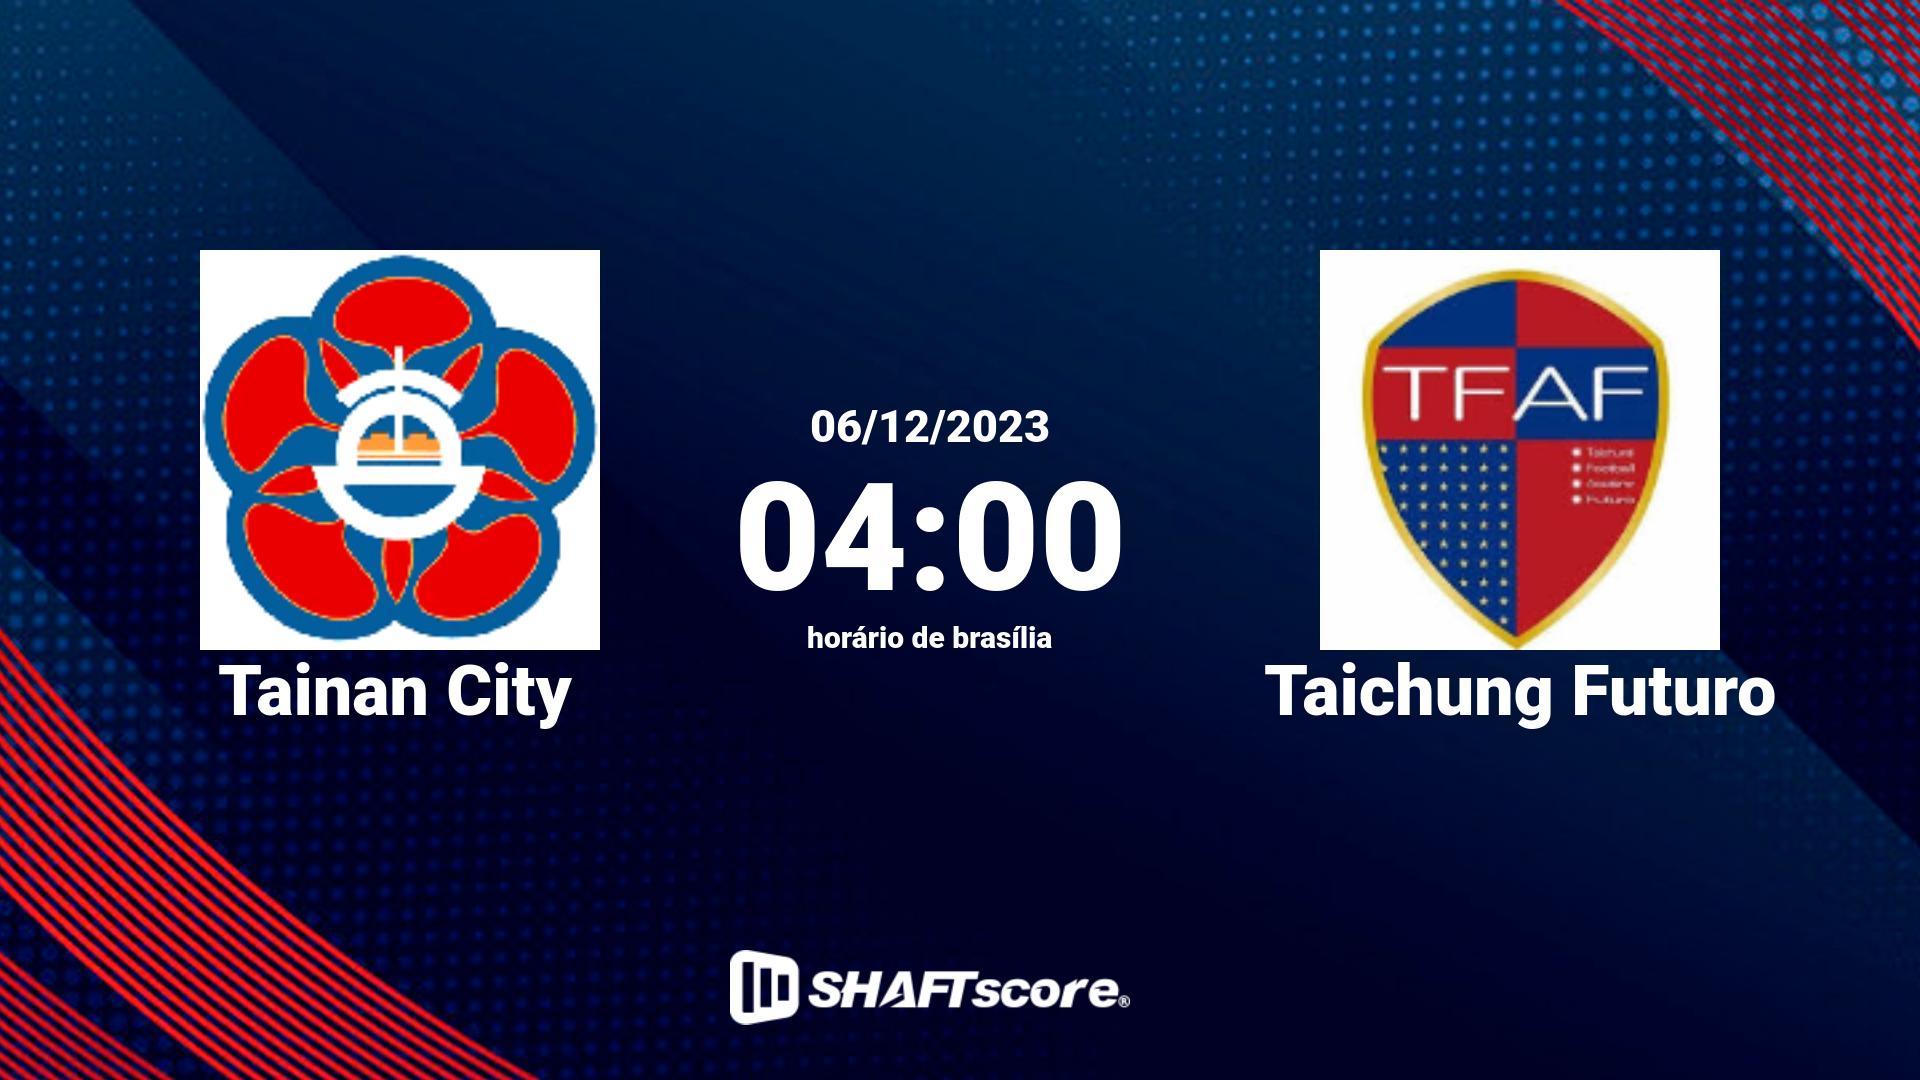 Estatísticas do jogo Tainan City vs Taichung Futuro 06.12 04:00